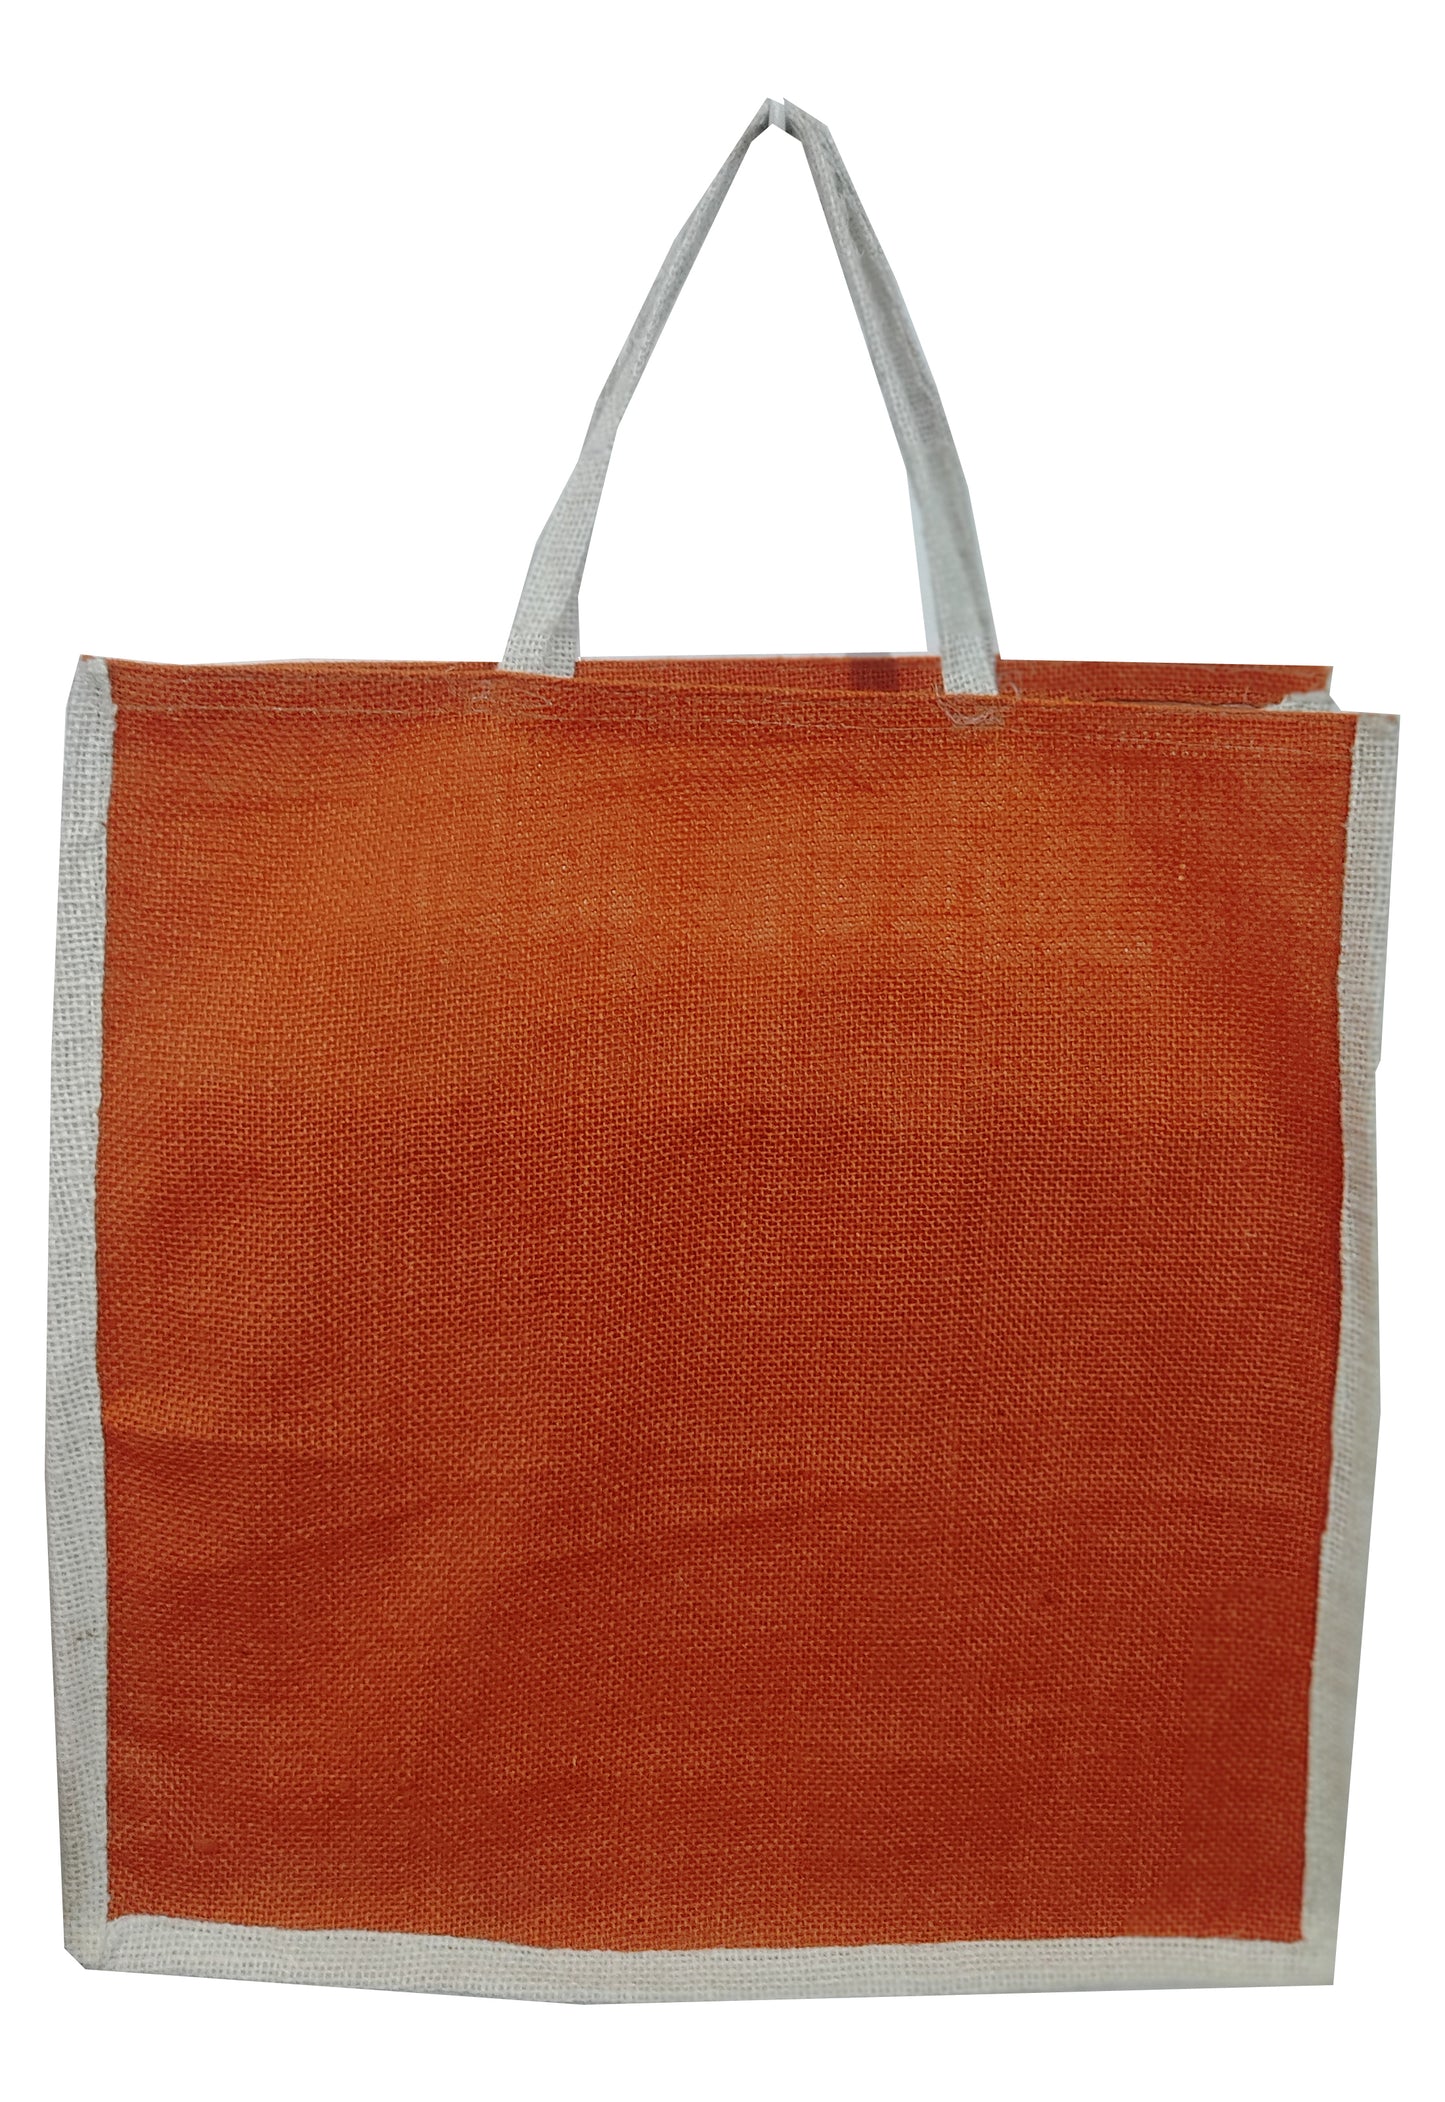 Natural handmade pure Orange jute bag with Rectangular Shape (Set of 4)